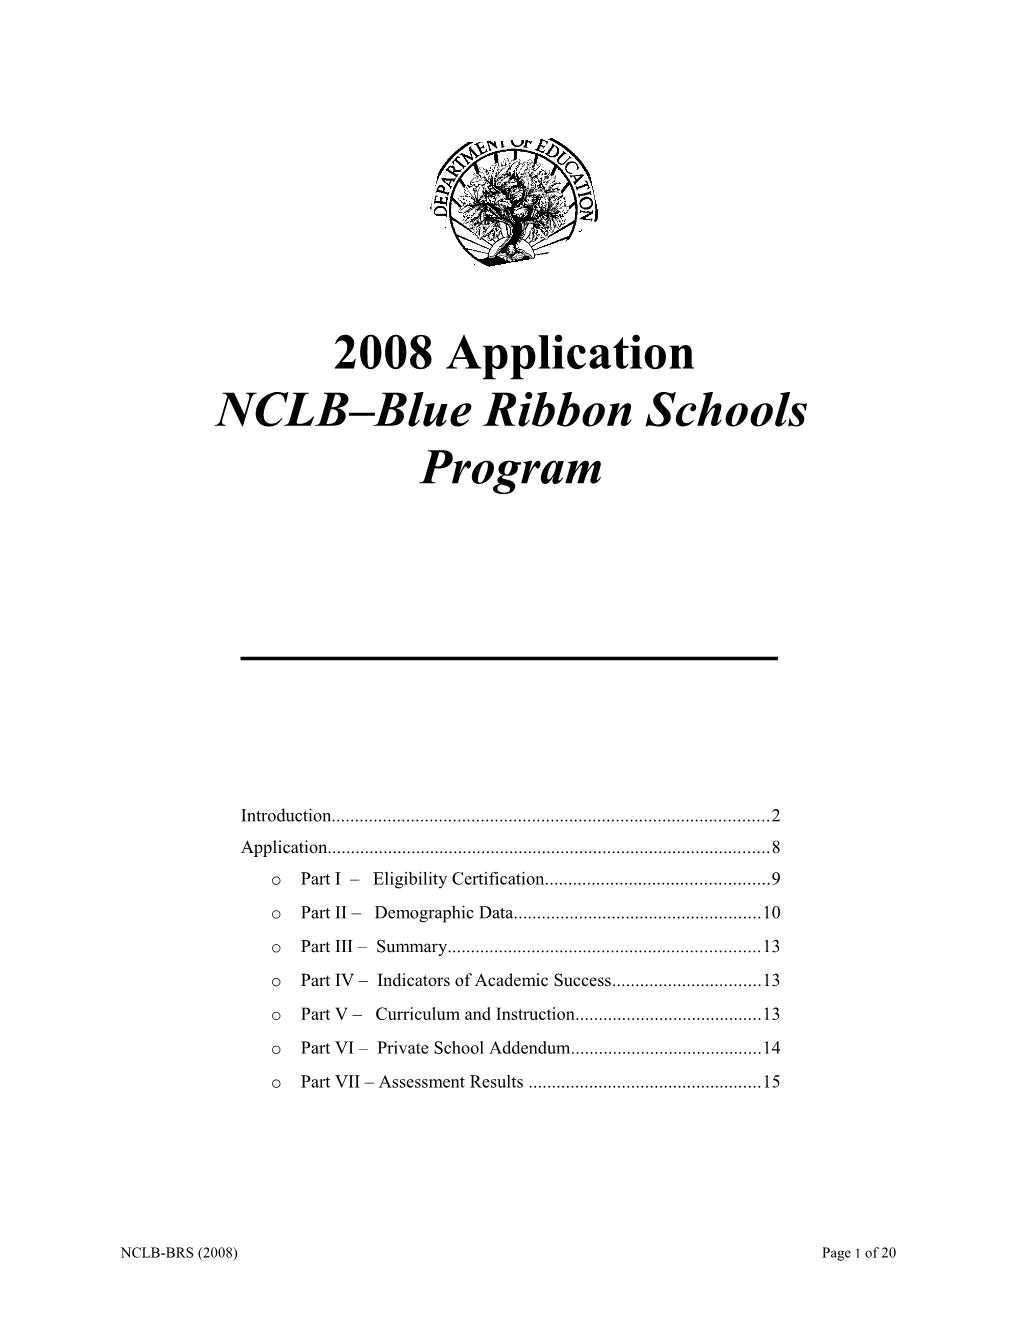 2008 Application, No Child Left Behind-Blue Ribbon Schools Program September 2007 (Msword)